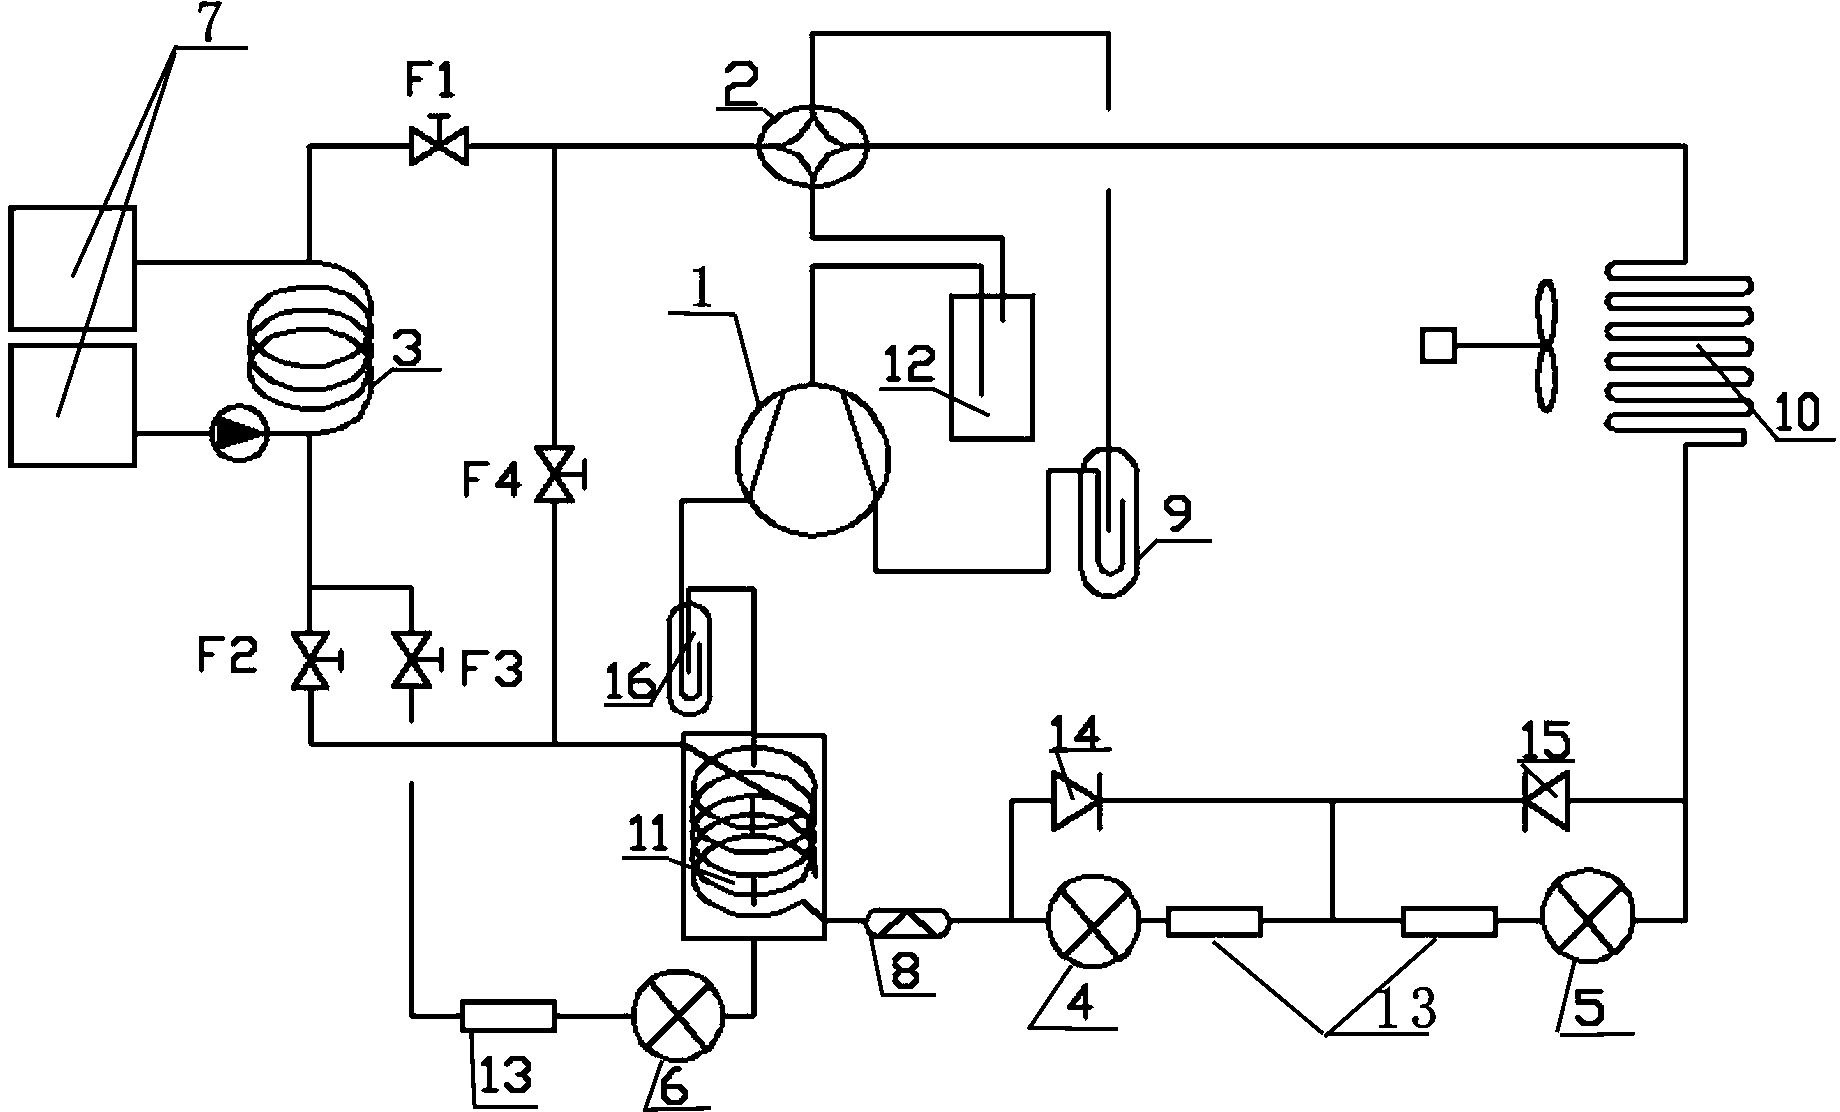 Air source heat pump water heater unit with phase change heat accumulation